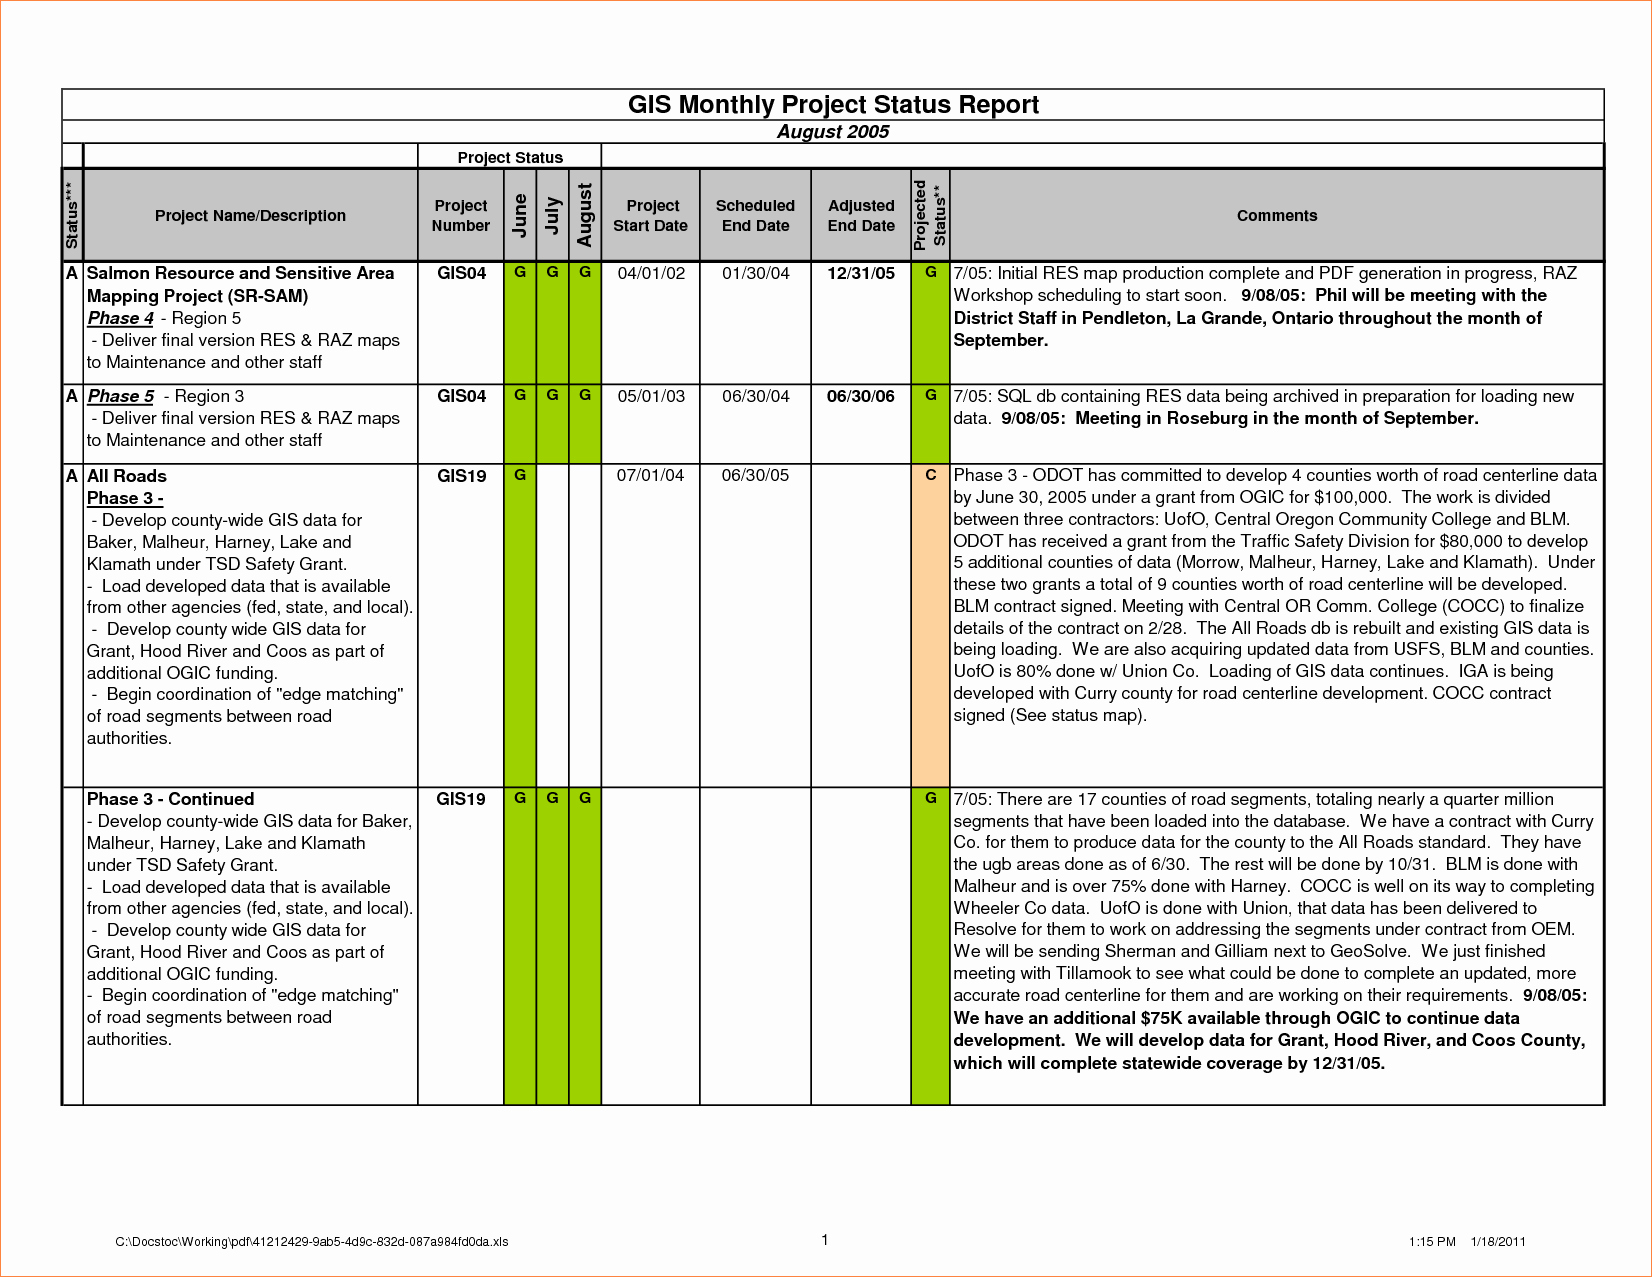 Program Management Status Report Template Awesome Project Management Status Report Template Excel All